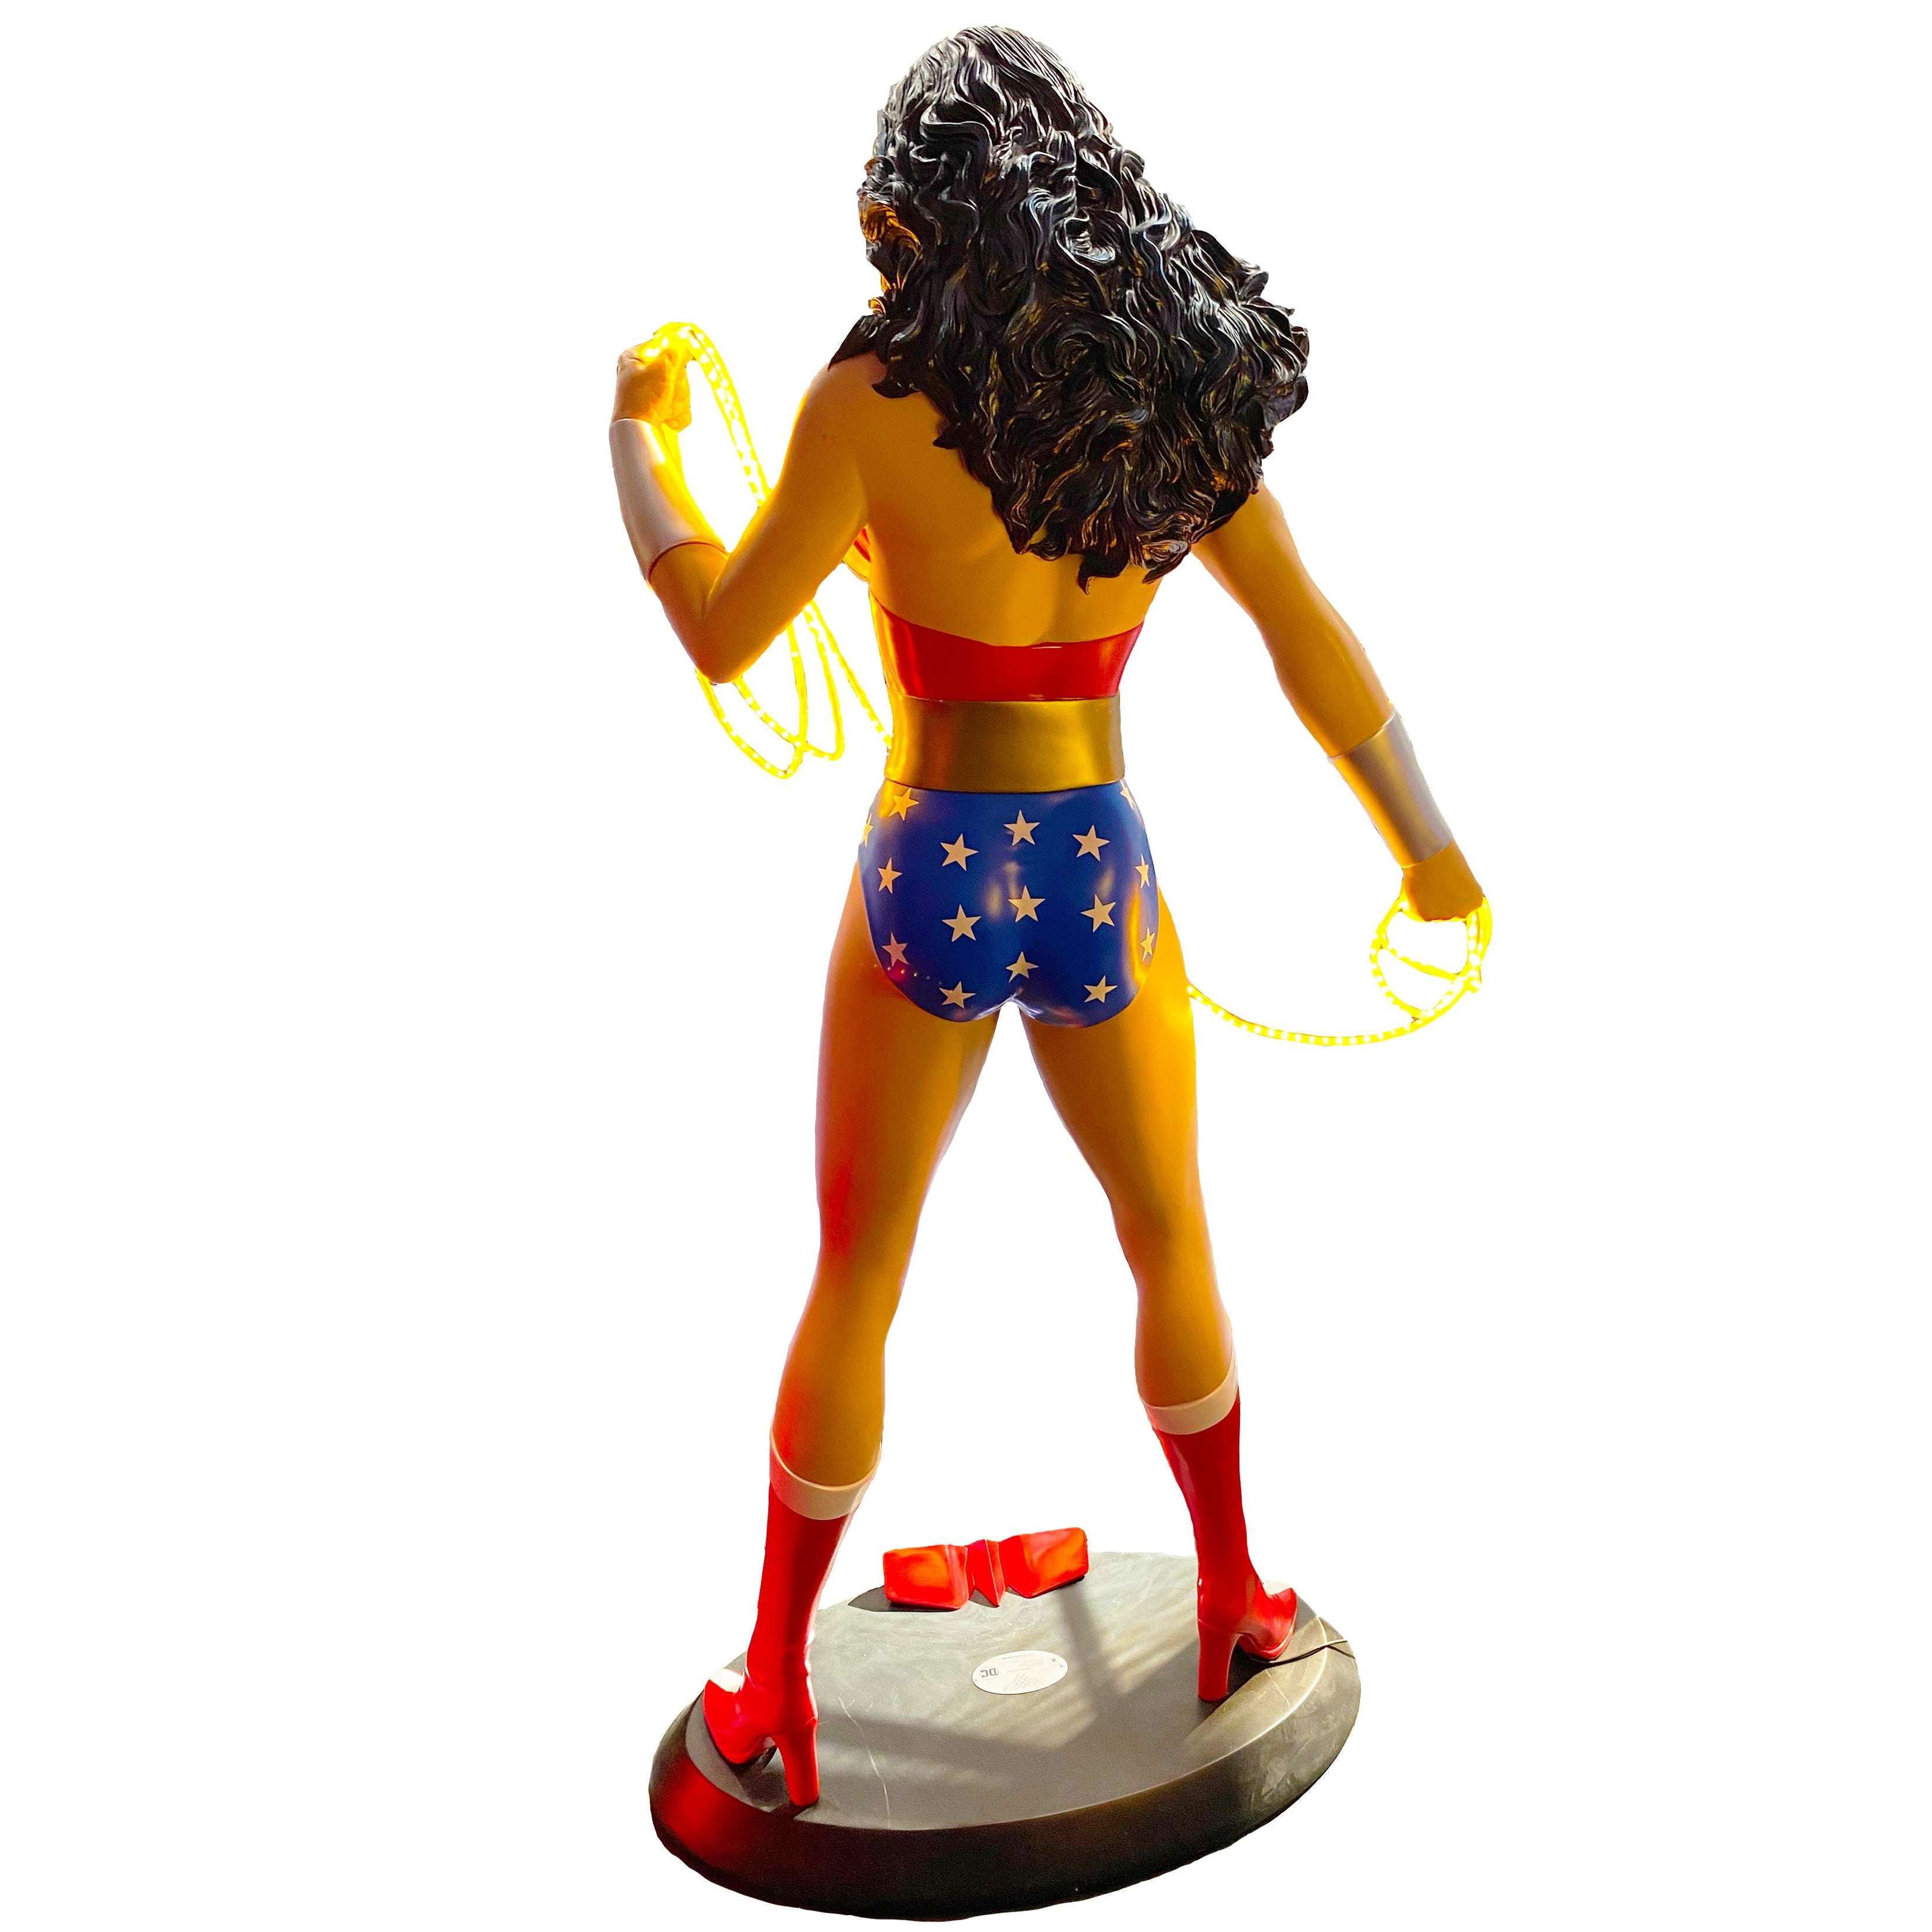 Wonder Woman 1984 ending embraces the lasso of truth's subversive